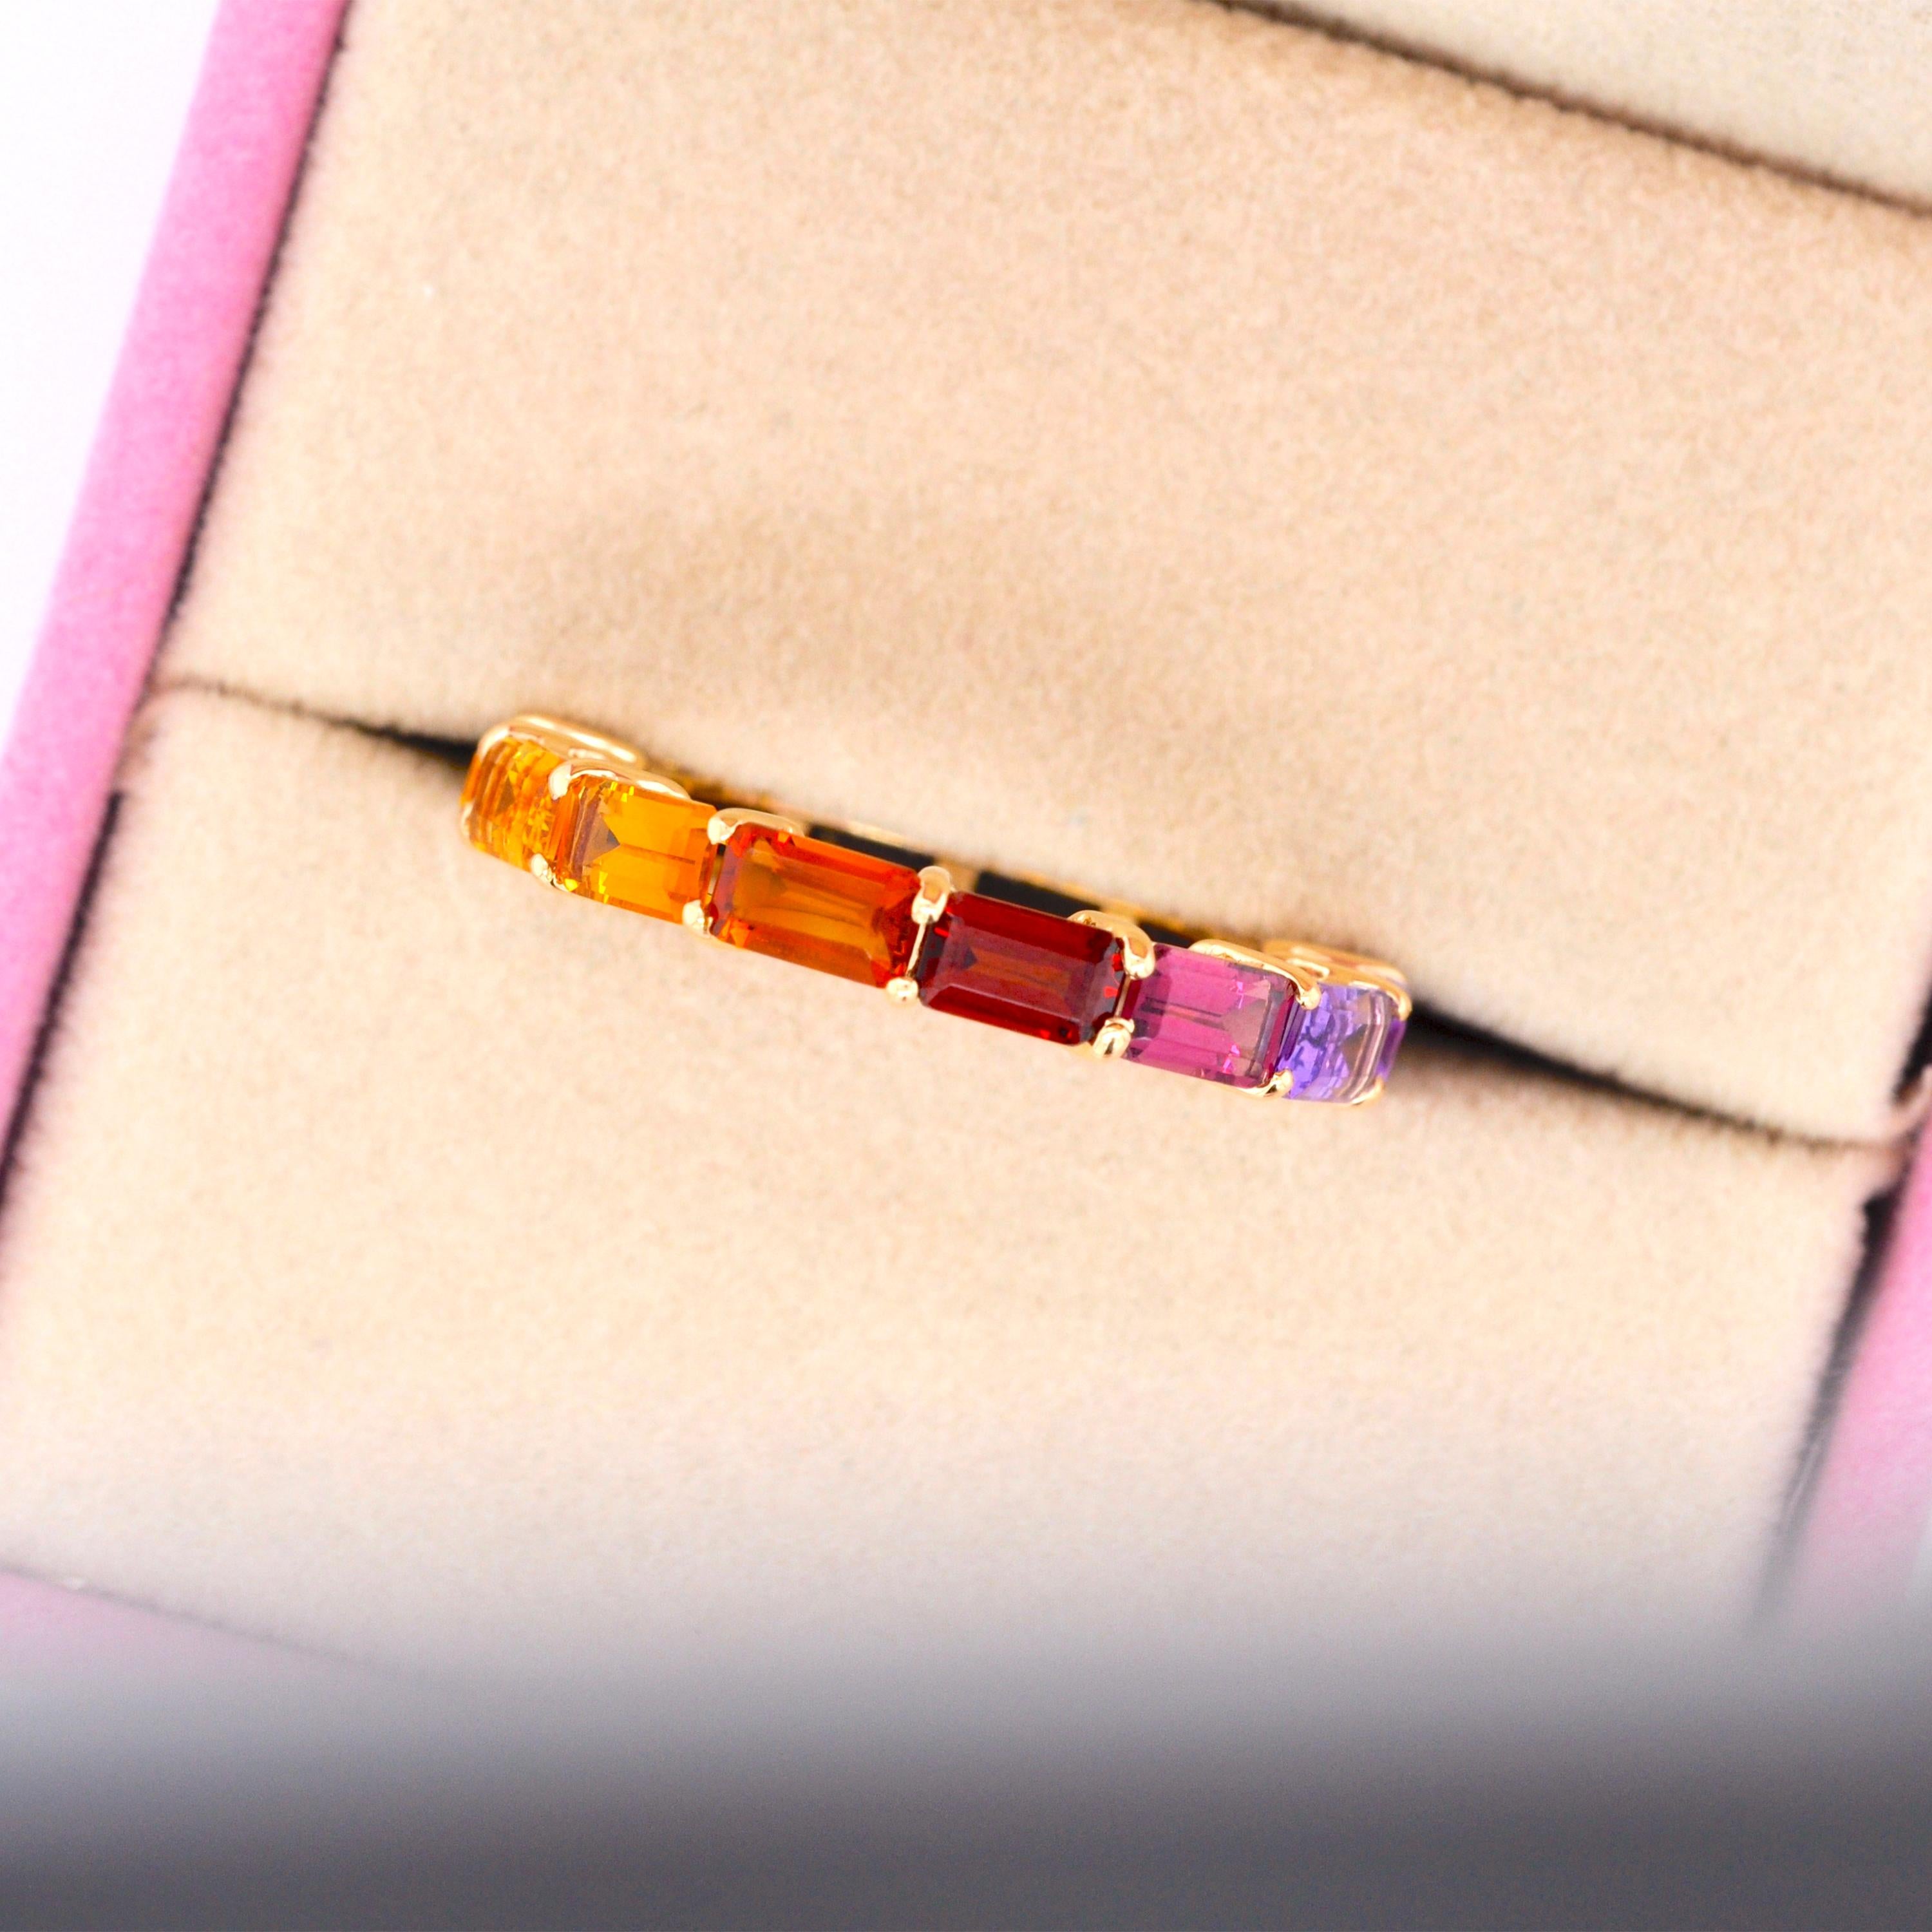 En vente :  Anneau d'éternité en or 18 carats serti de pierres précieuses octogonales multicolores arc-en-ciel 4